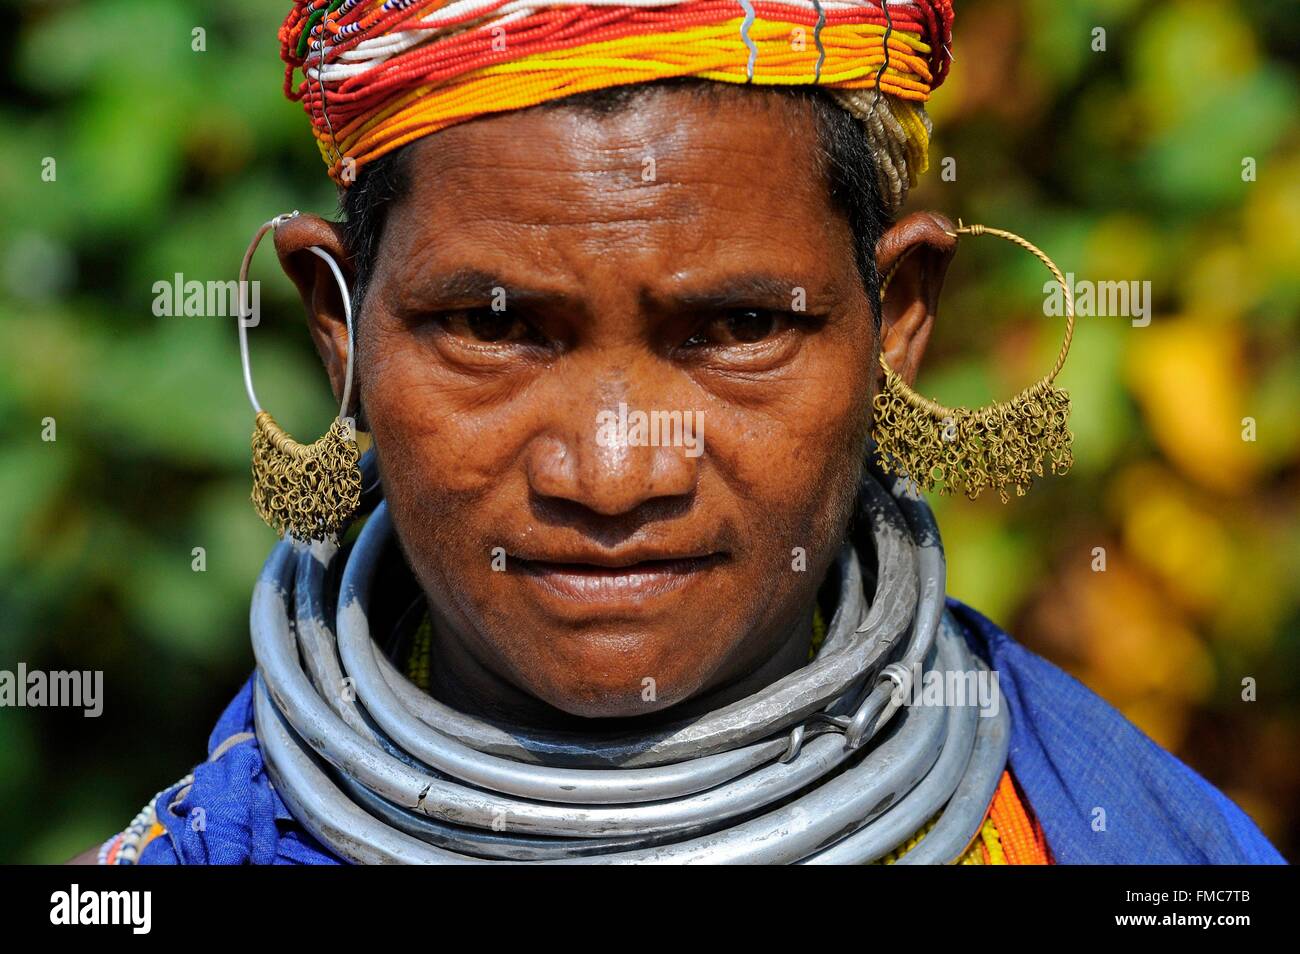 India, Odisha, woman from Bonda's ethnic group Stock Photo